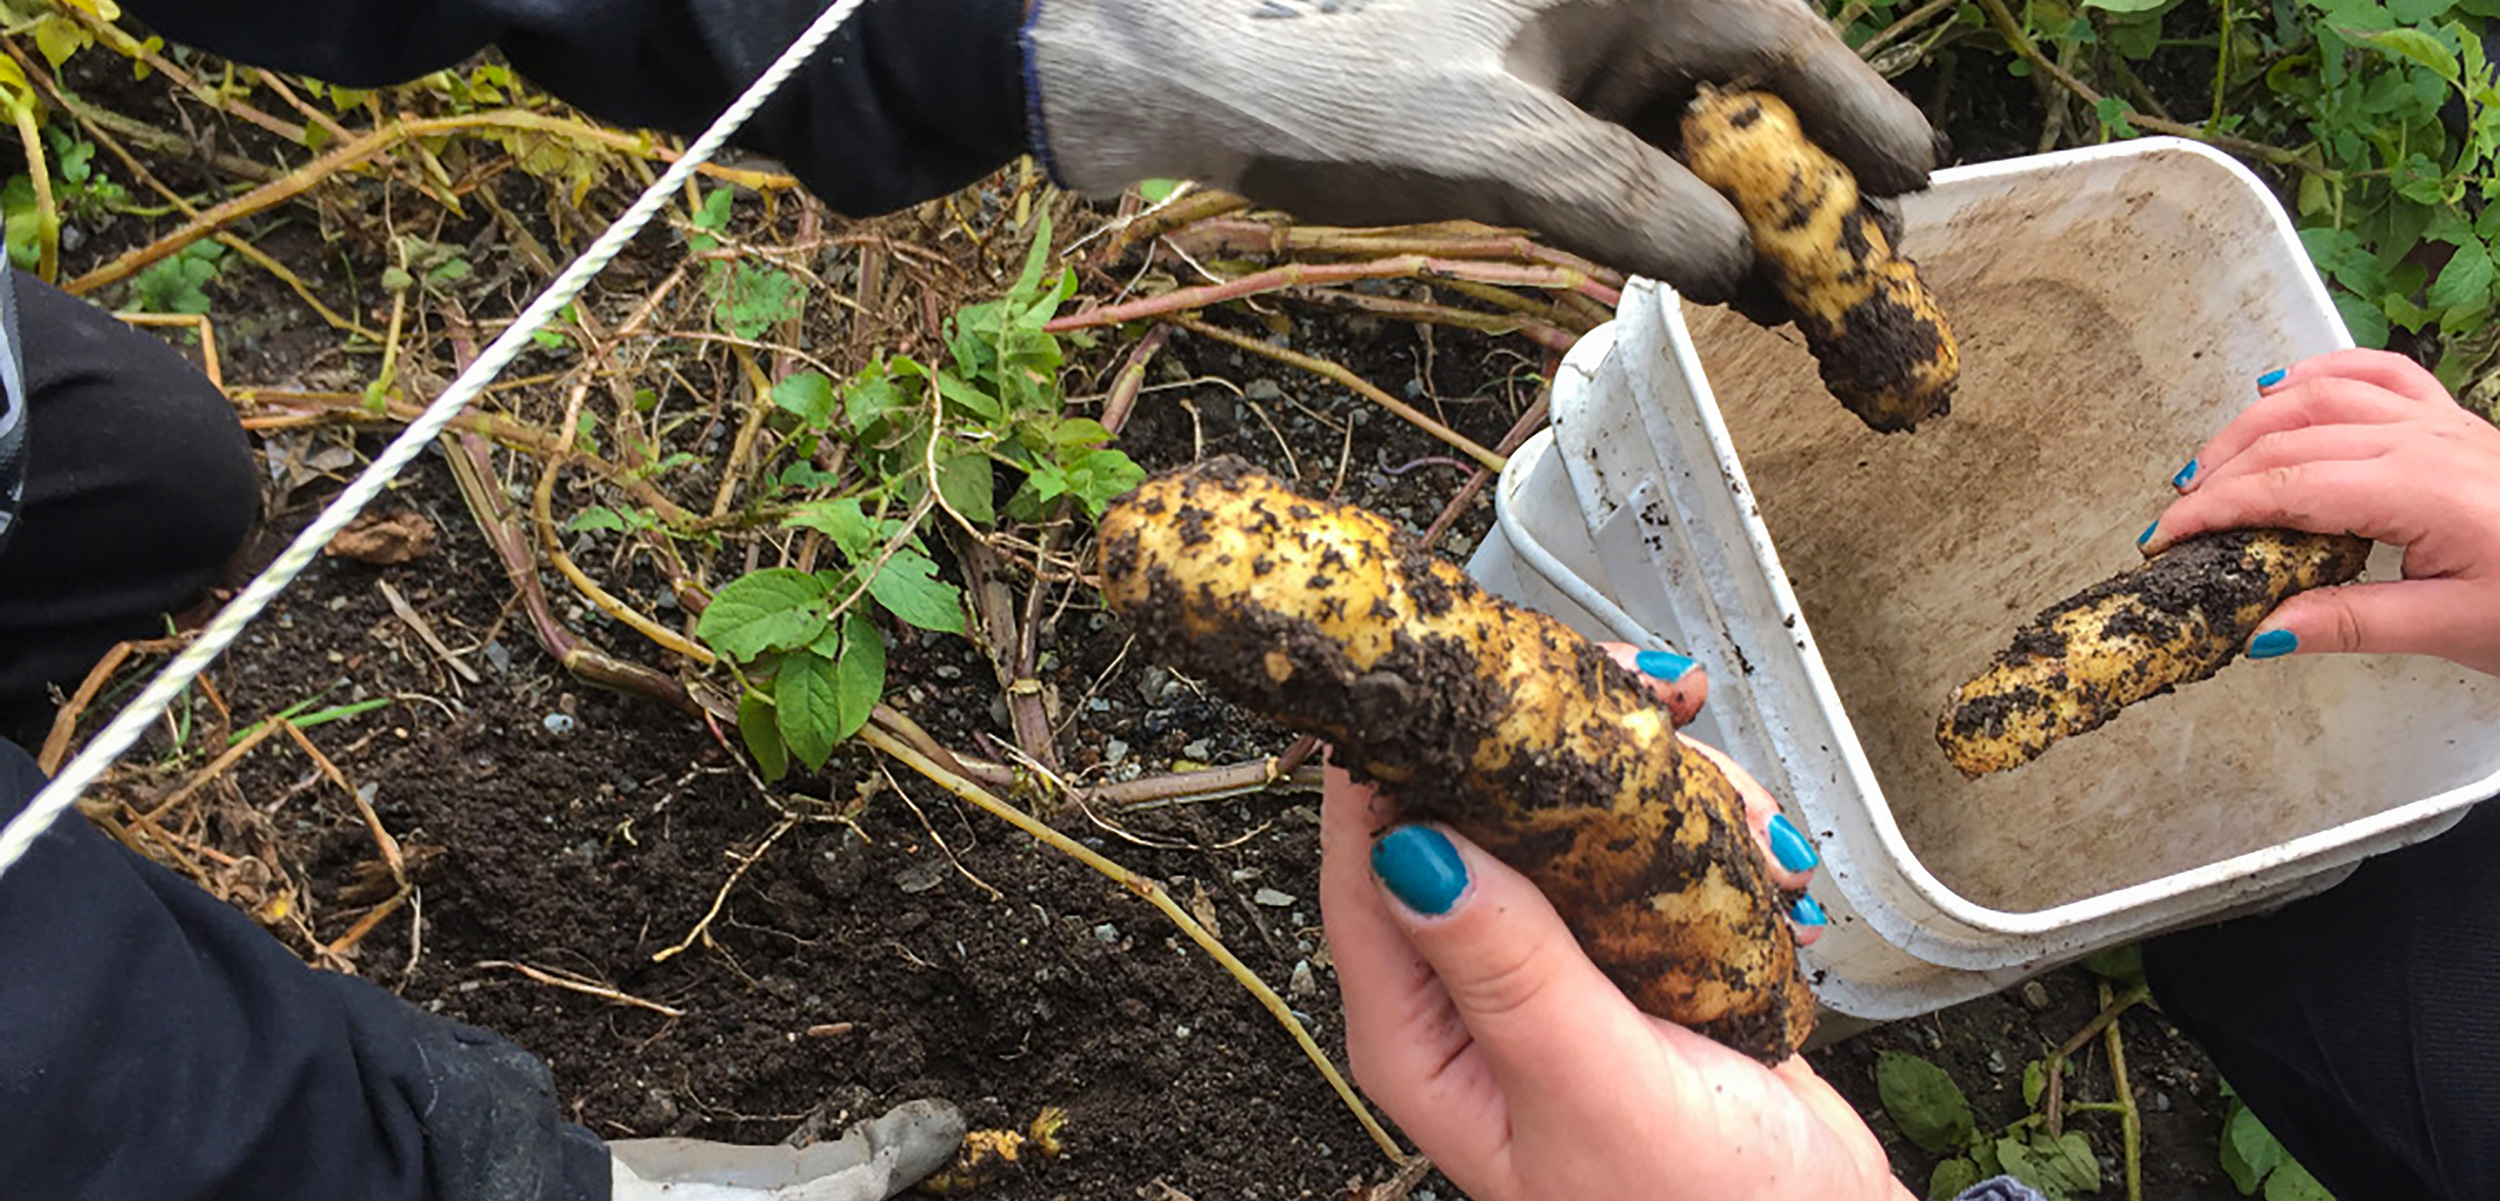 Tlingit potatoes being harvested